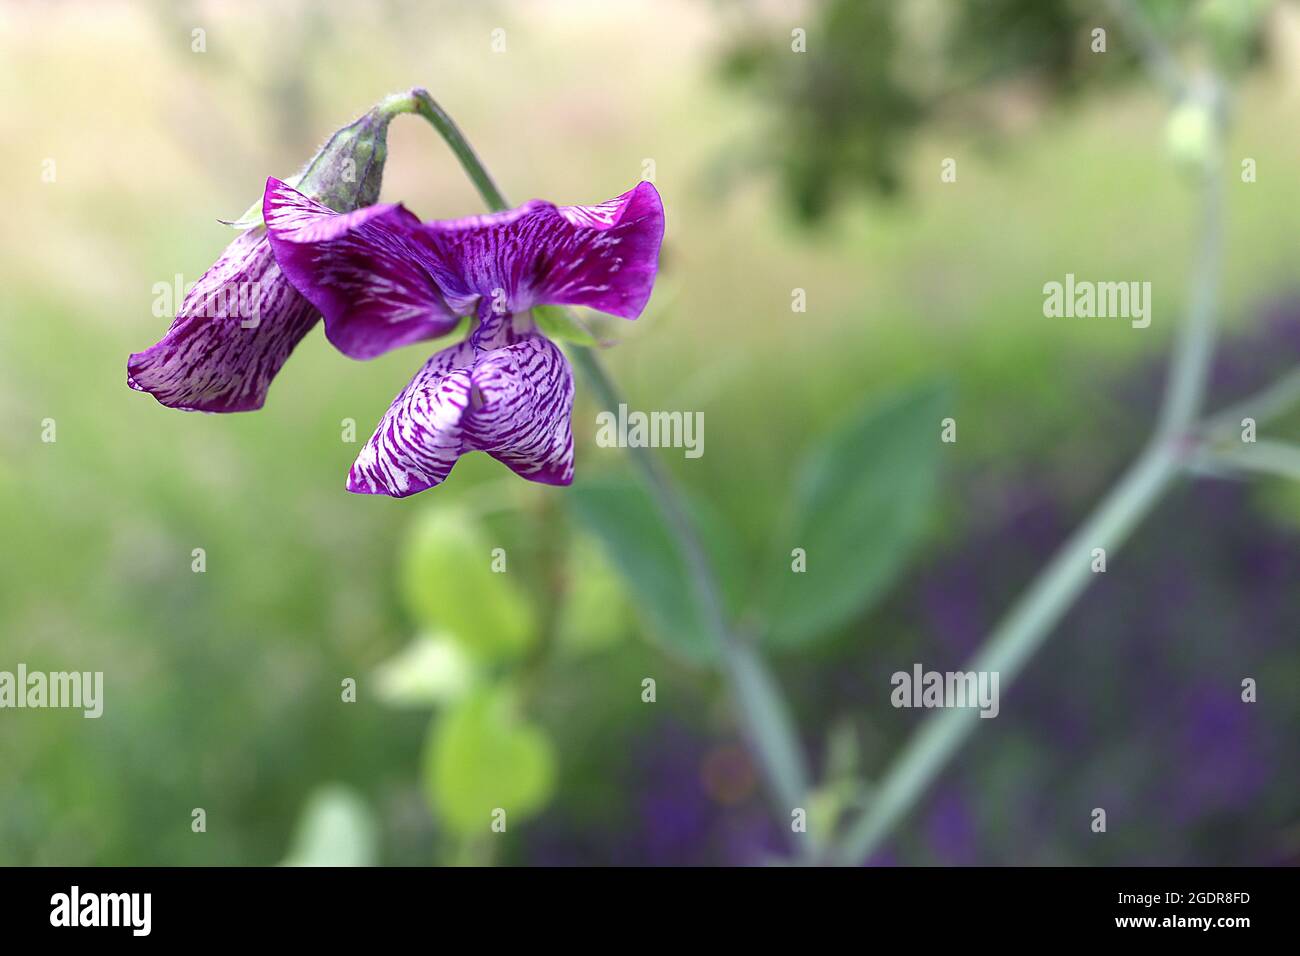 Lathyrus odoratus ‘Cupani’ sweet pea Cupani – mottled highly scented purple flowers mottled white, possible mosaic virus,  July, England, UK Stock Photo